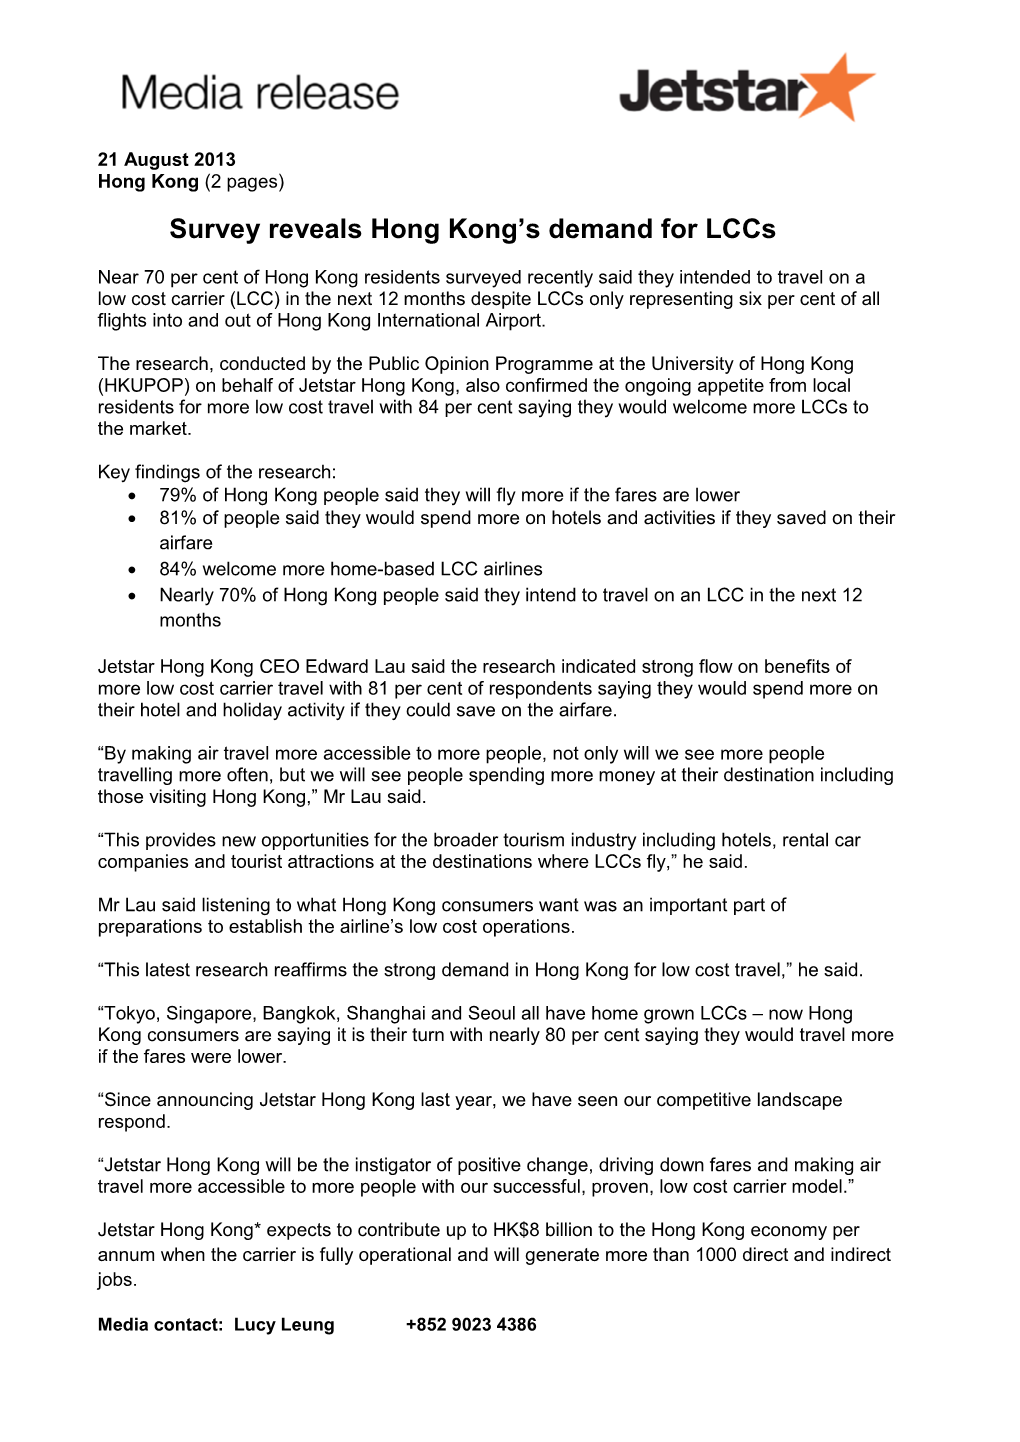 Survey Reveals Hong Kong's Demand for Lccs